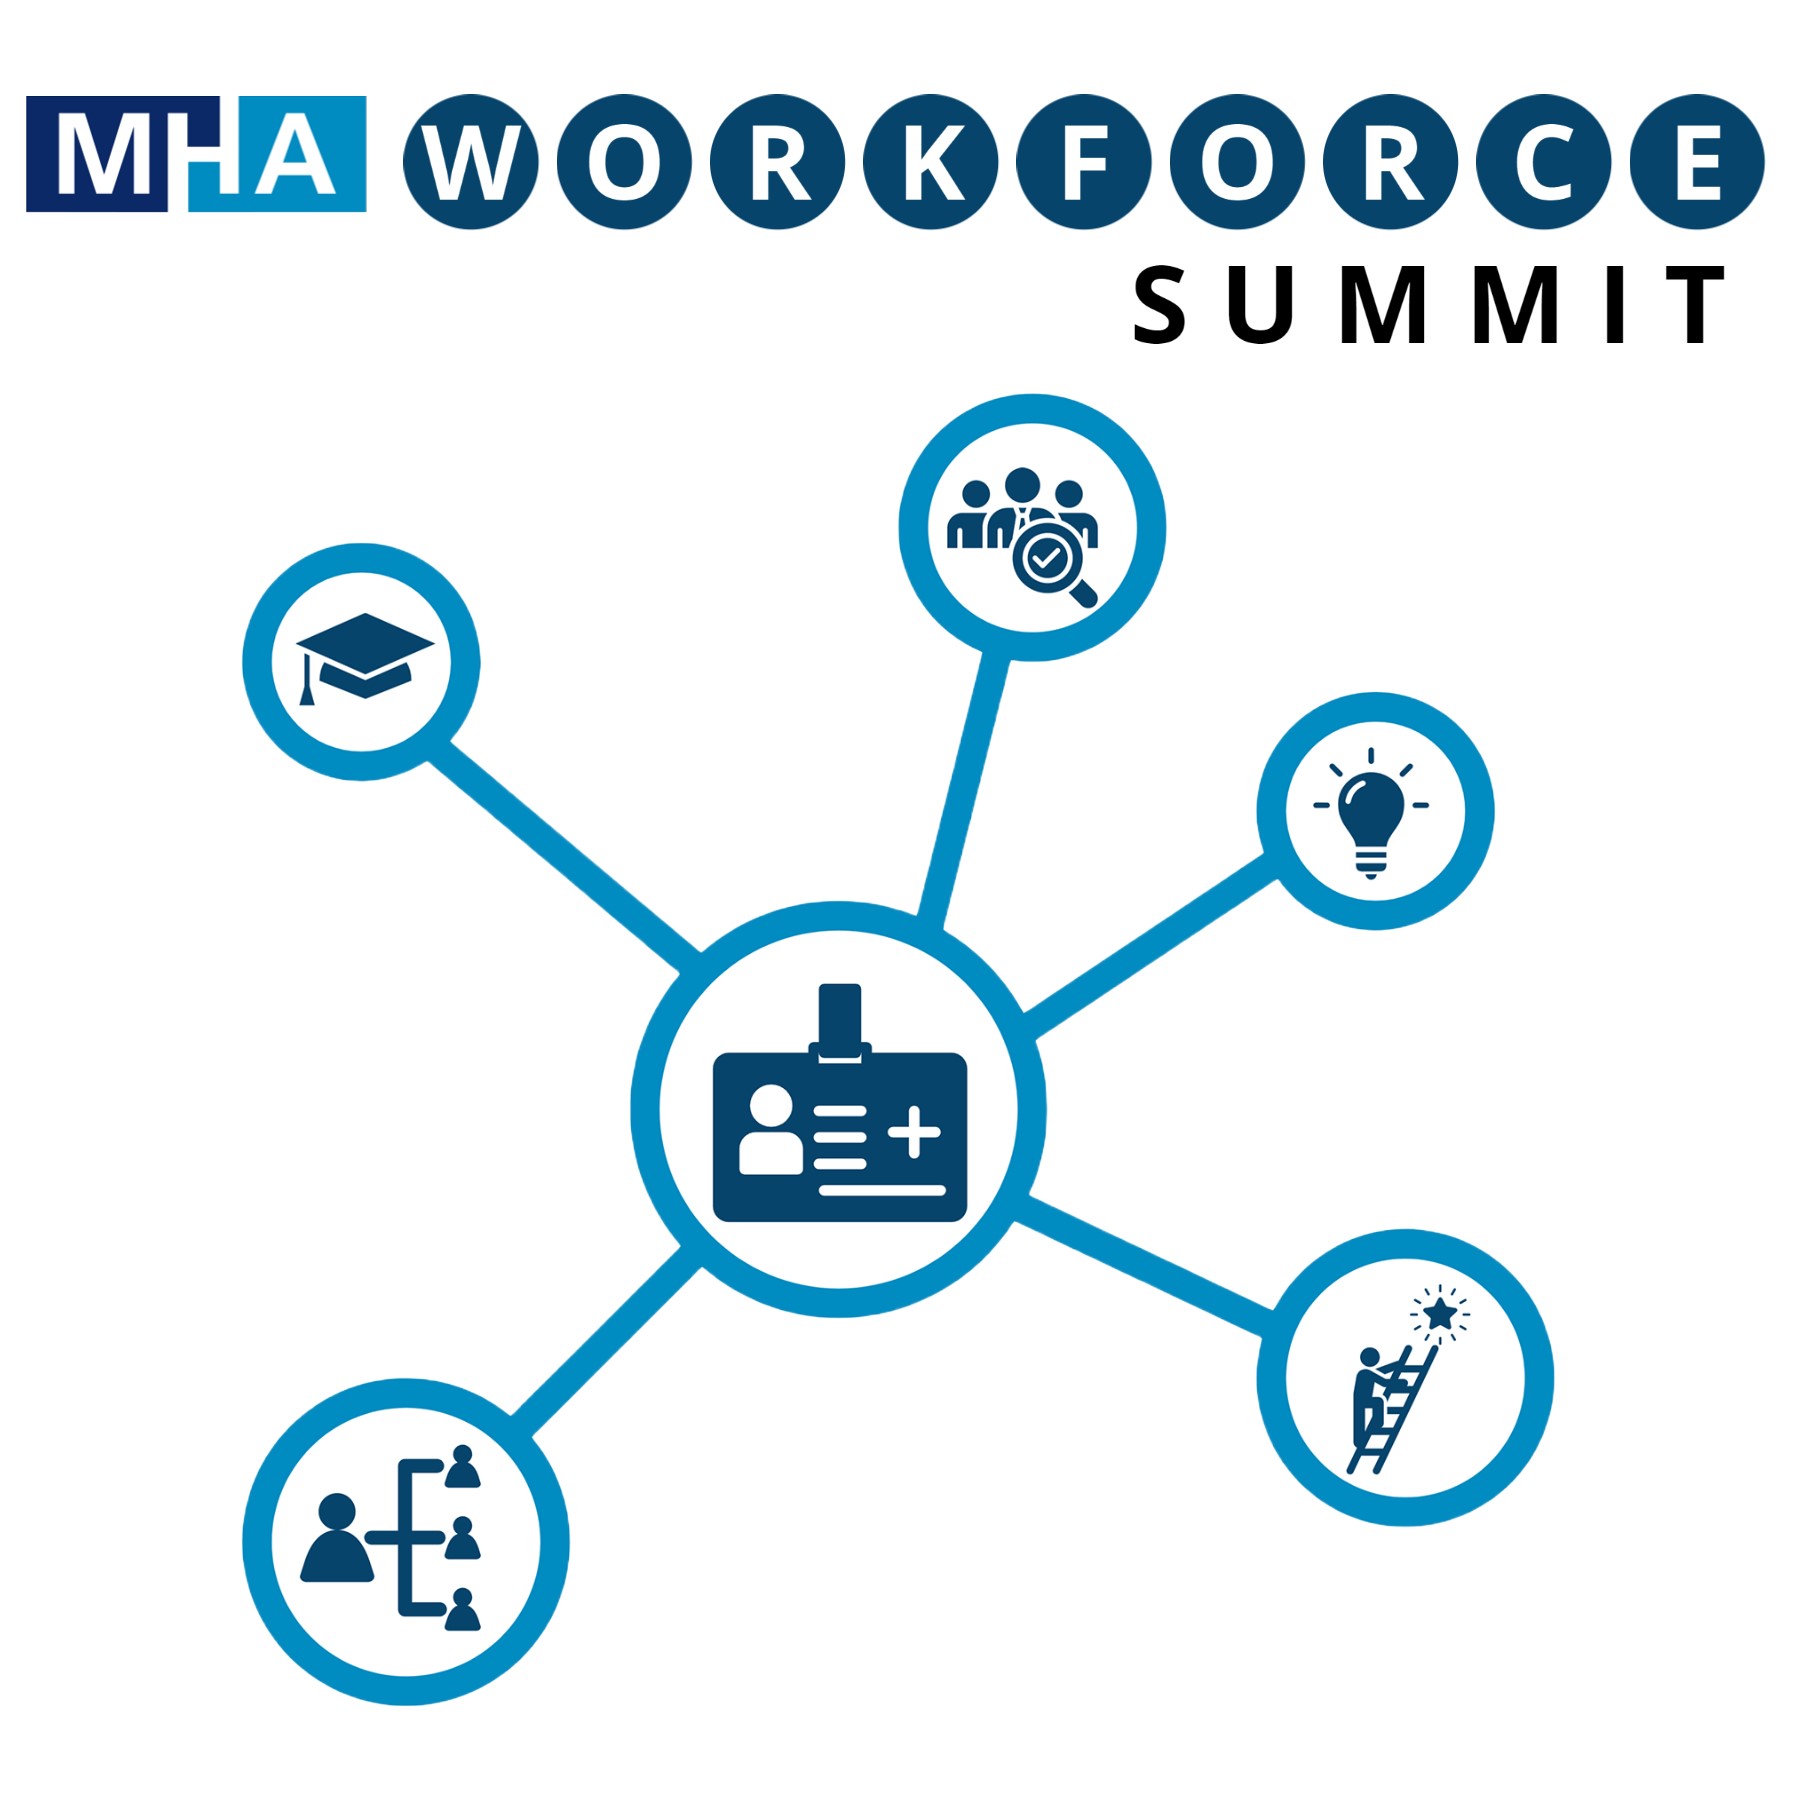 MHA Workforce Summit